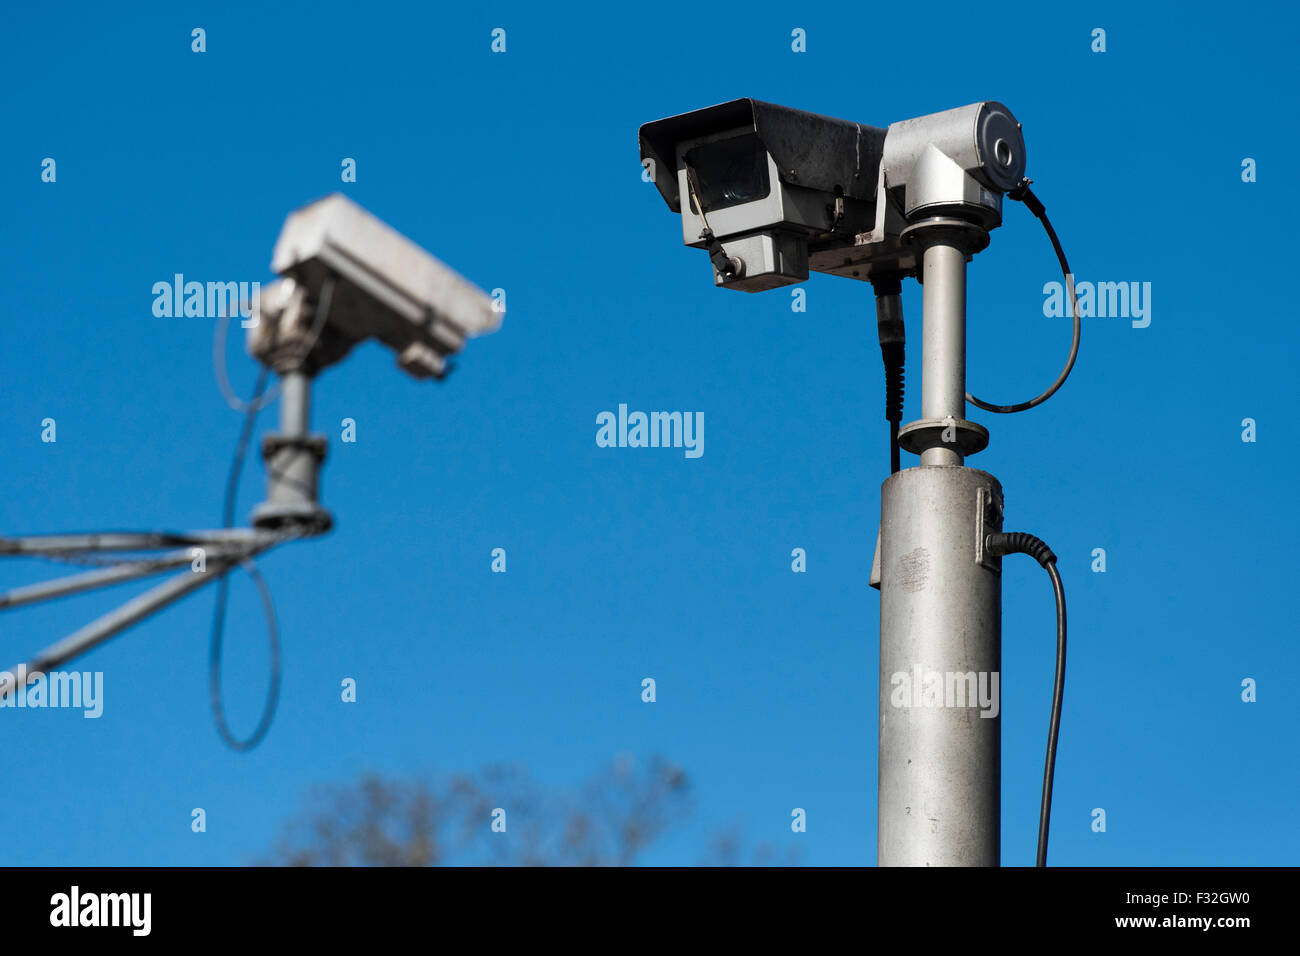 Dos cámaras de seguridad CCTV contra un cielo azul. Foto de stock